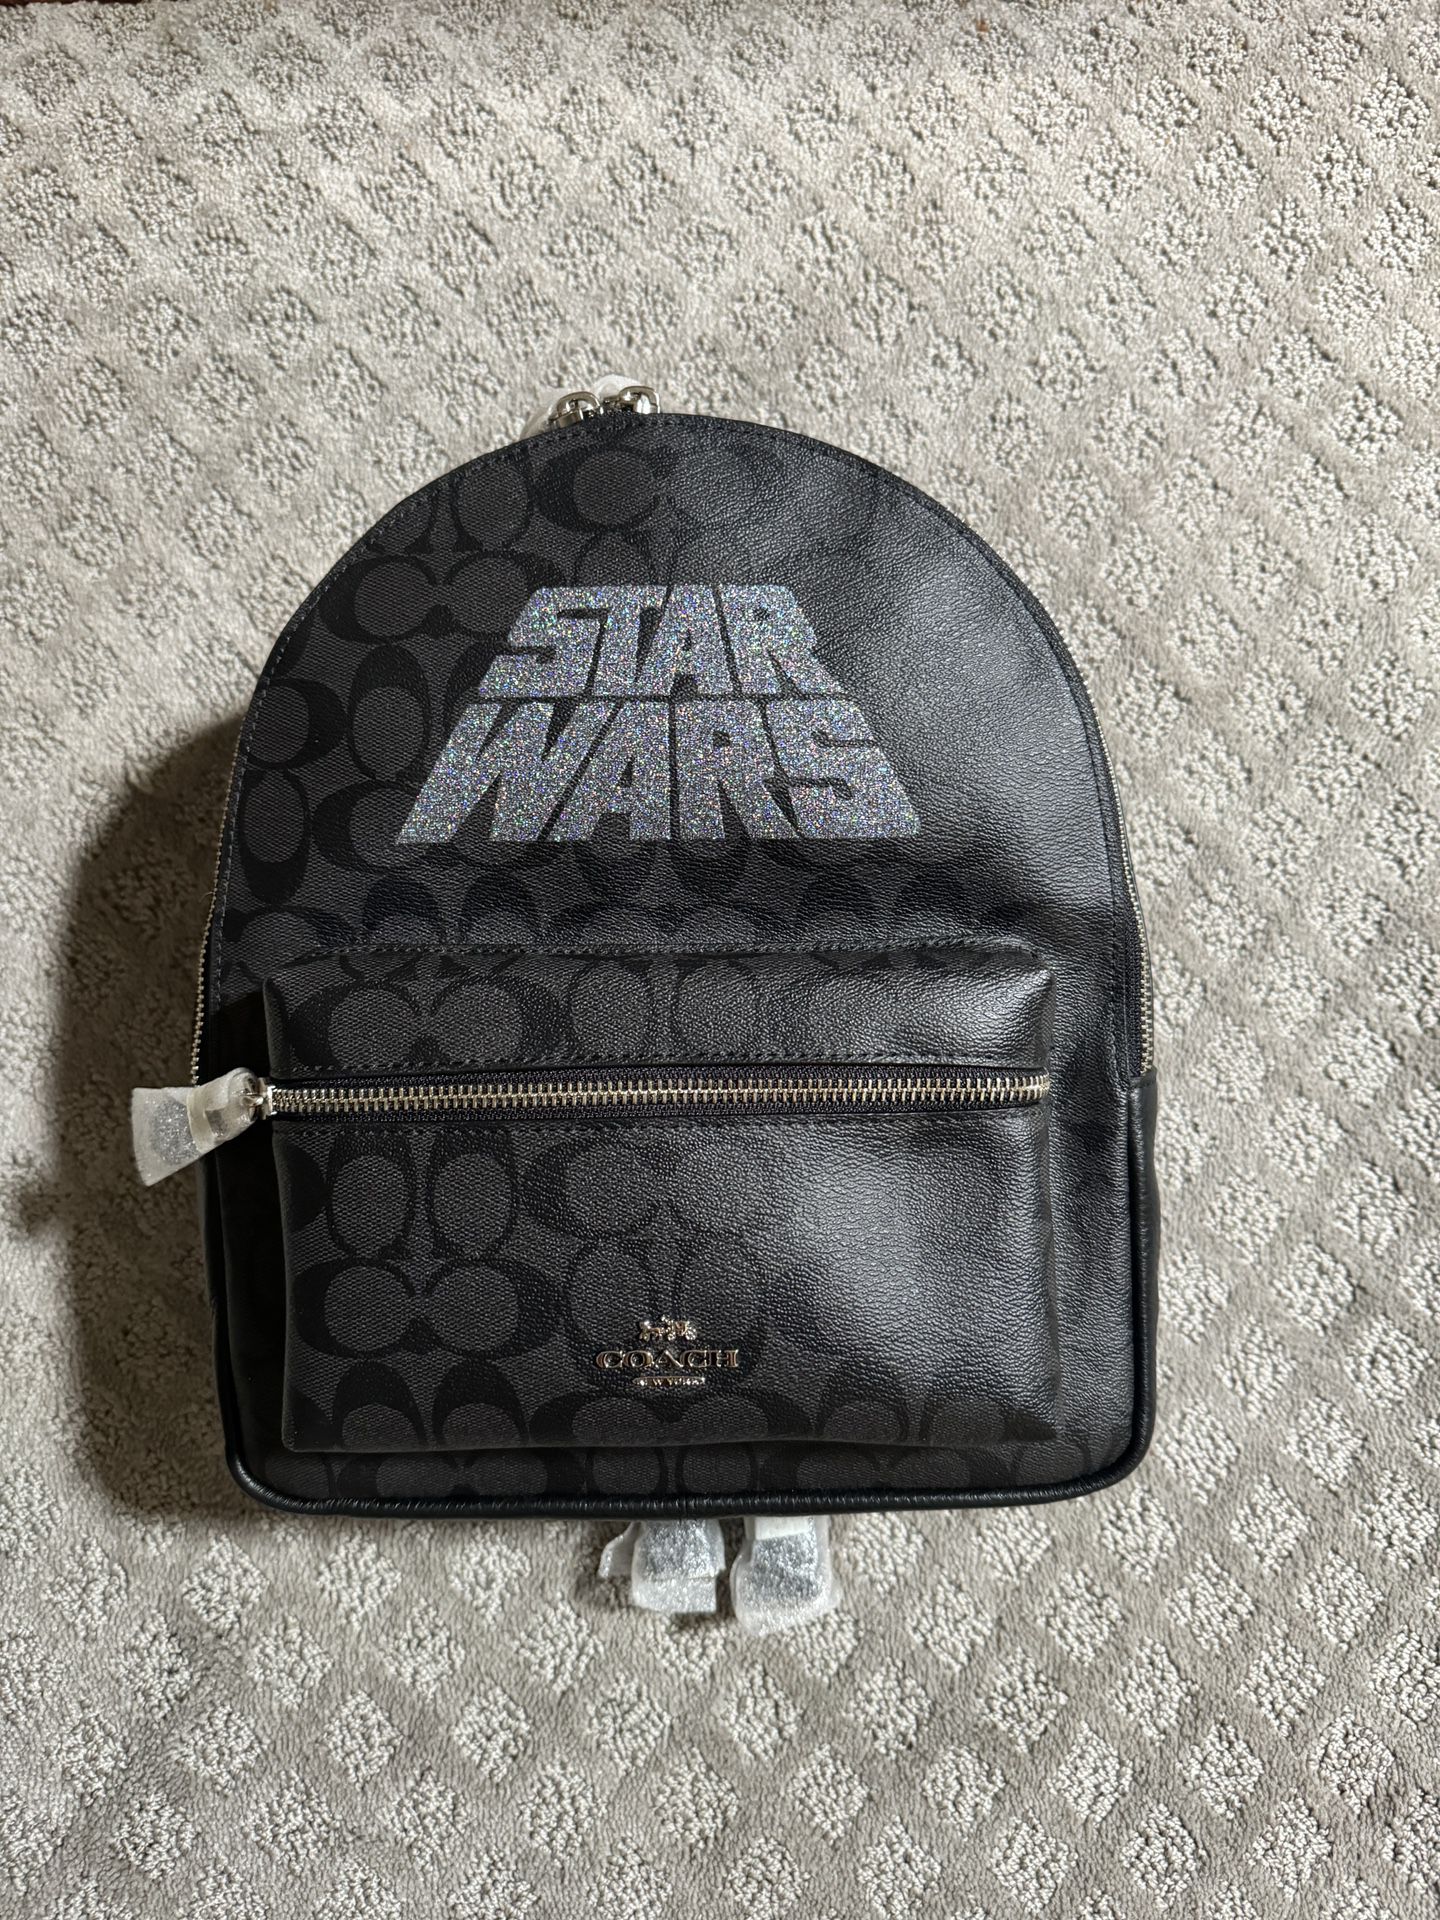 Coach star wars backpack 